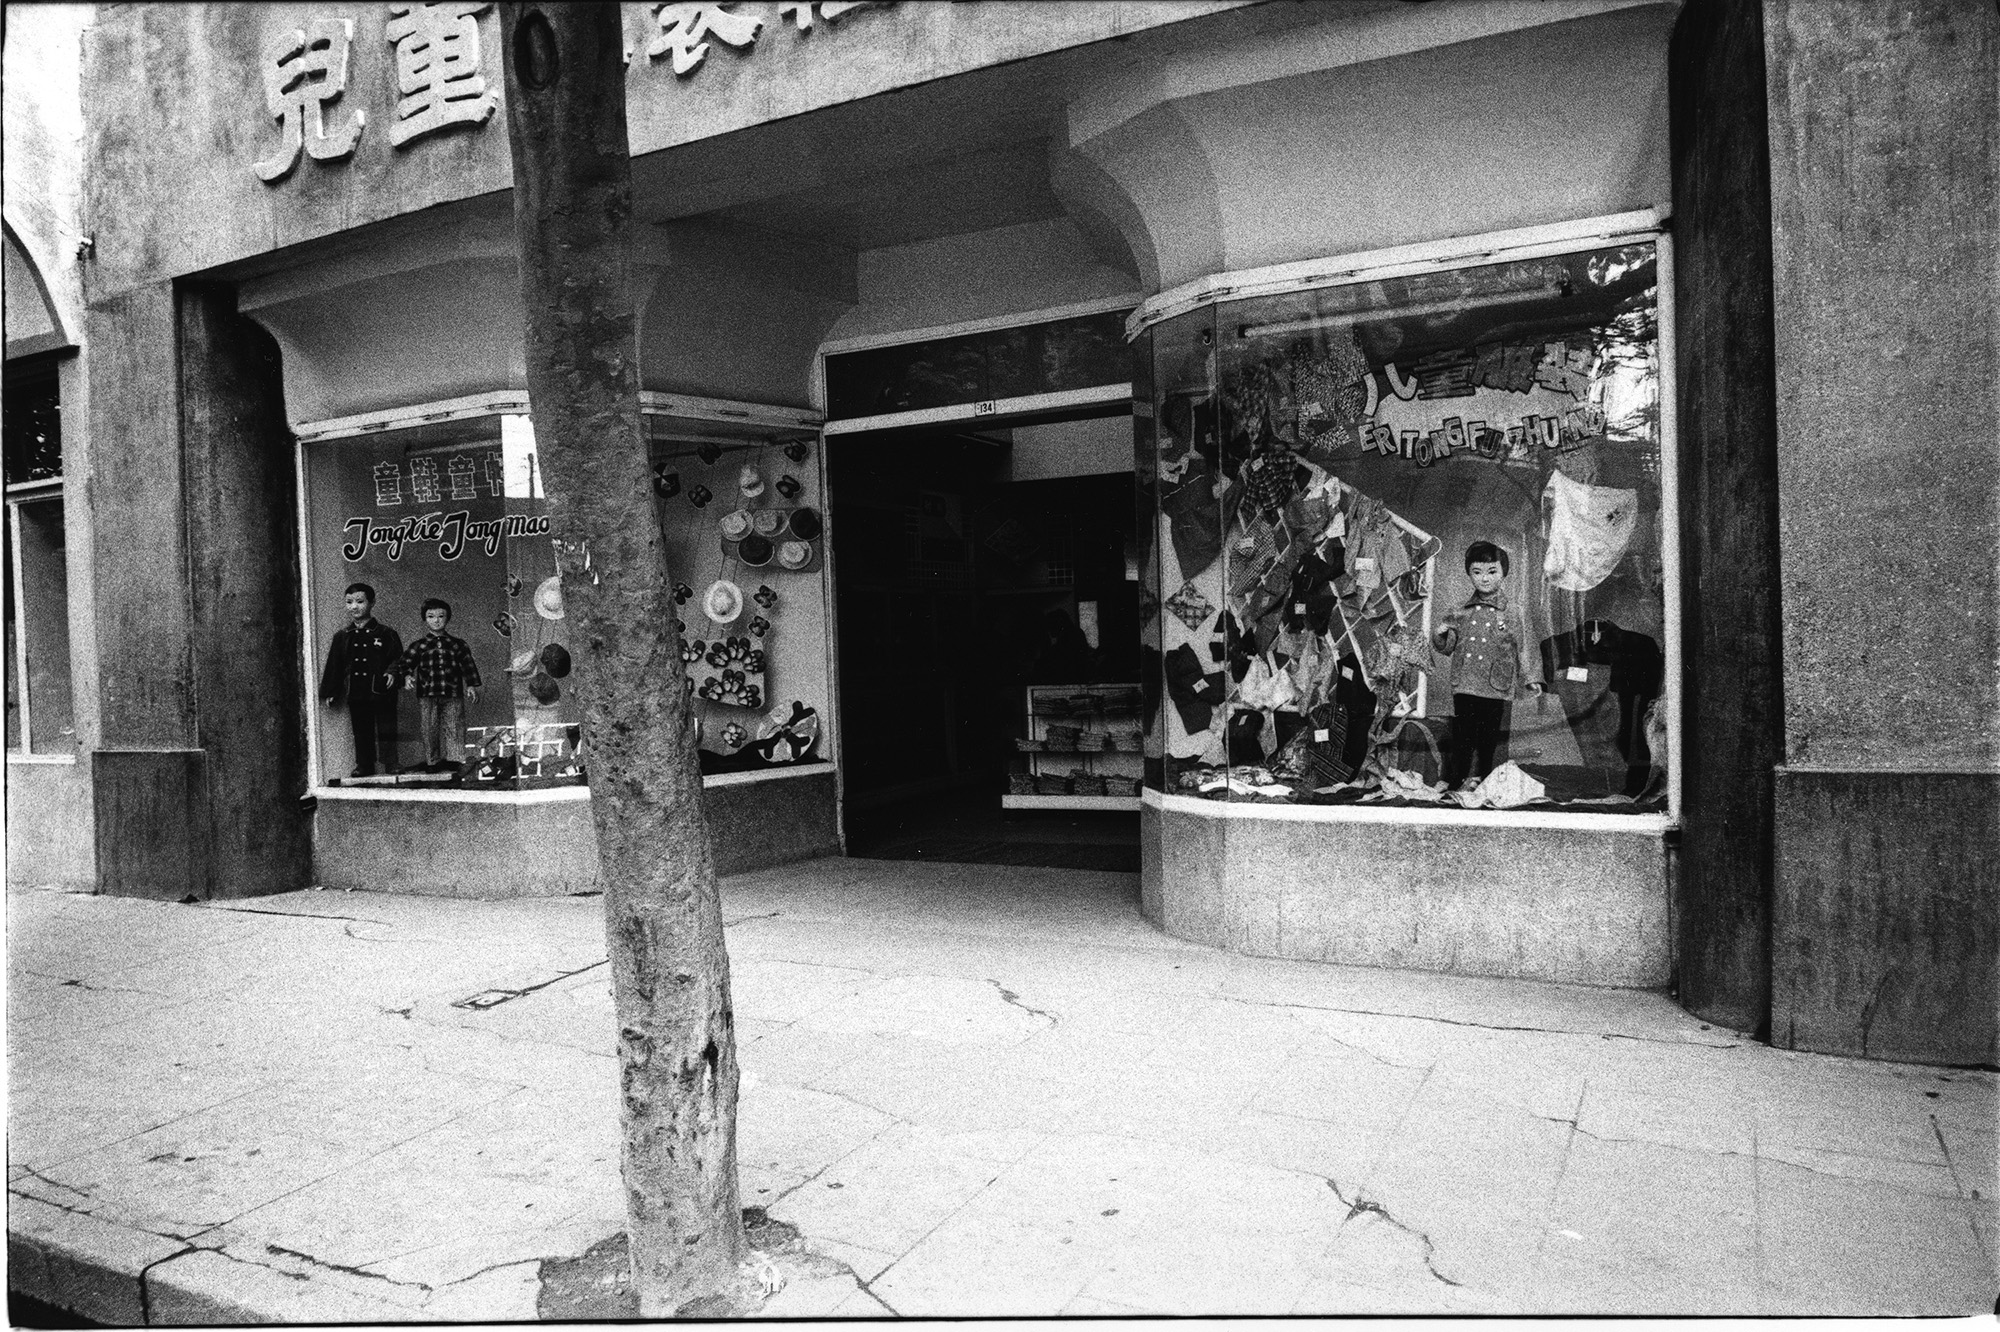 kazuo kitai china 1970s photography of china 55蘇州1973 - Kazuo Kitai |  - Kazuo Kitai